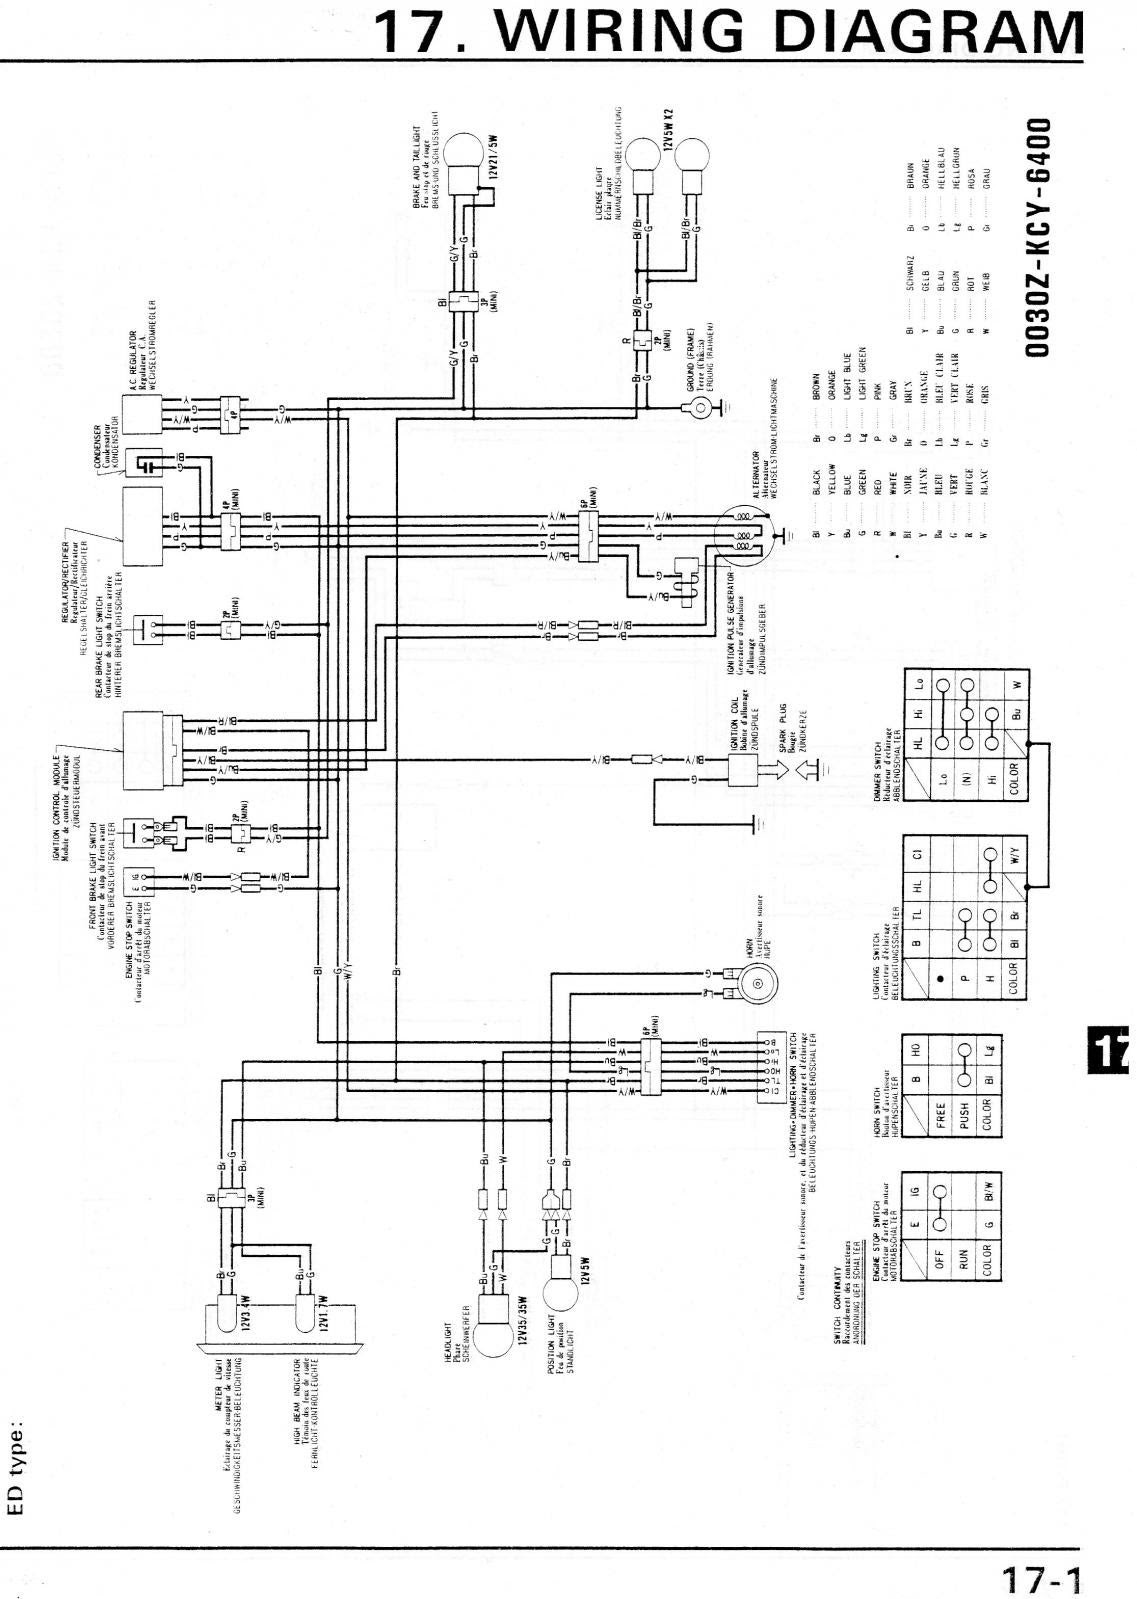 Mitsubishi Jeep Wiring Diagram Free Picture Schematic - Wiring Diagram